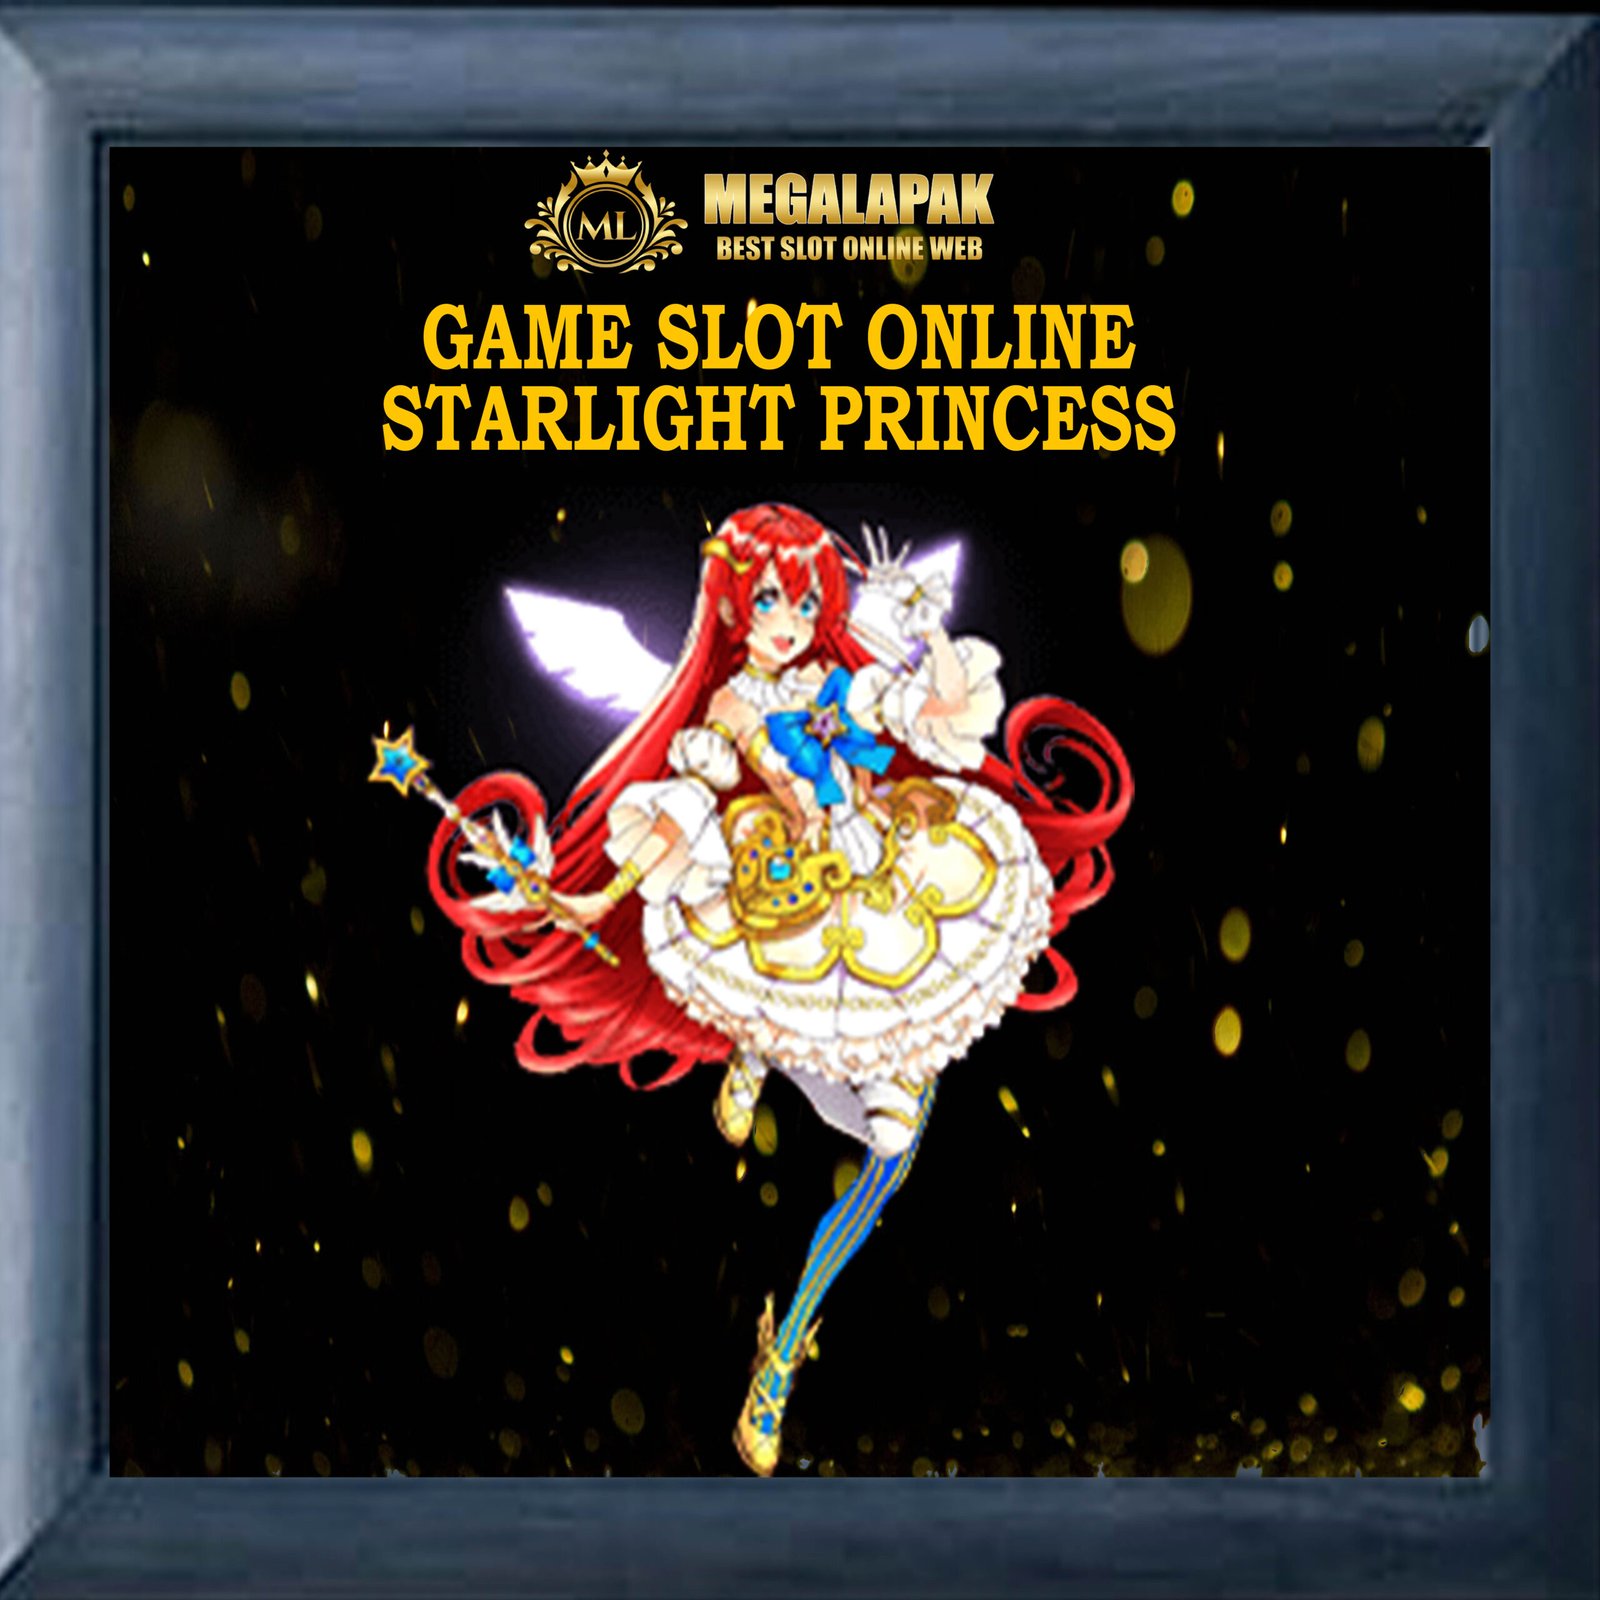 Slot Online Starlight Princess Megalapak